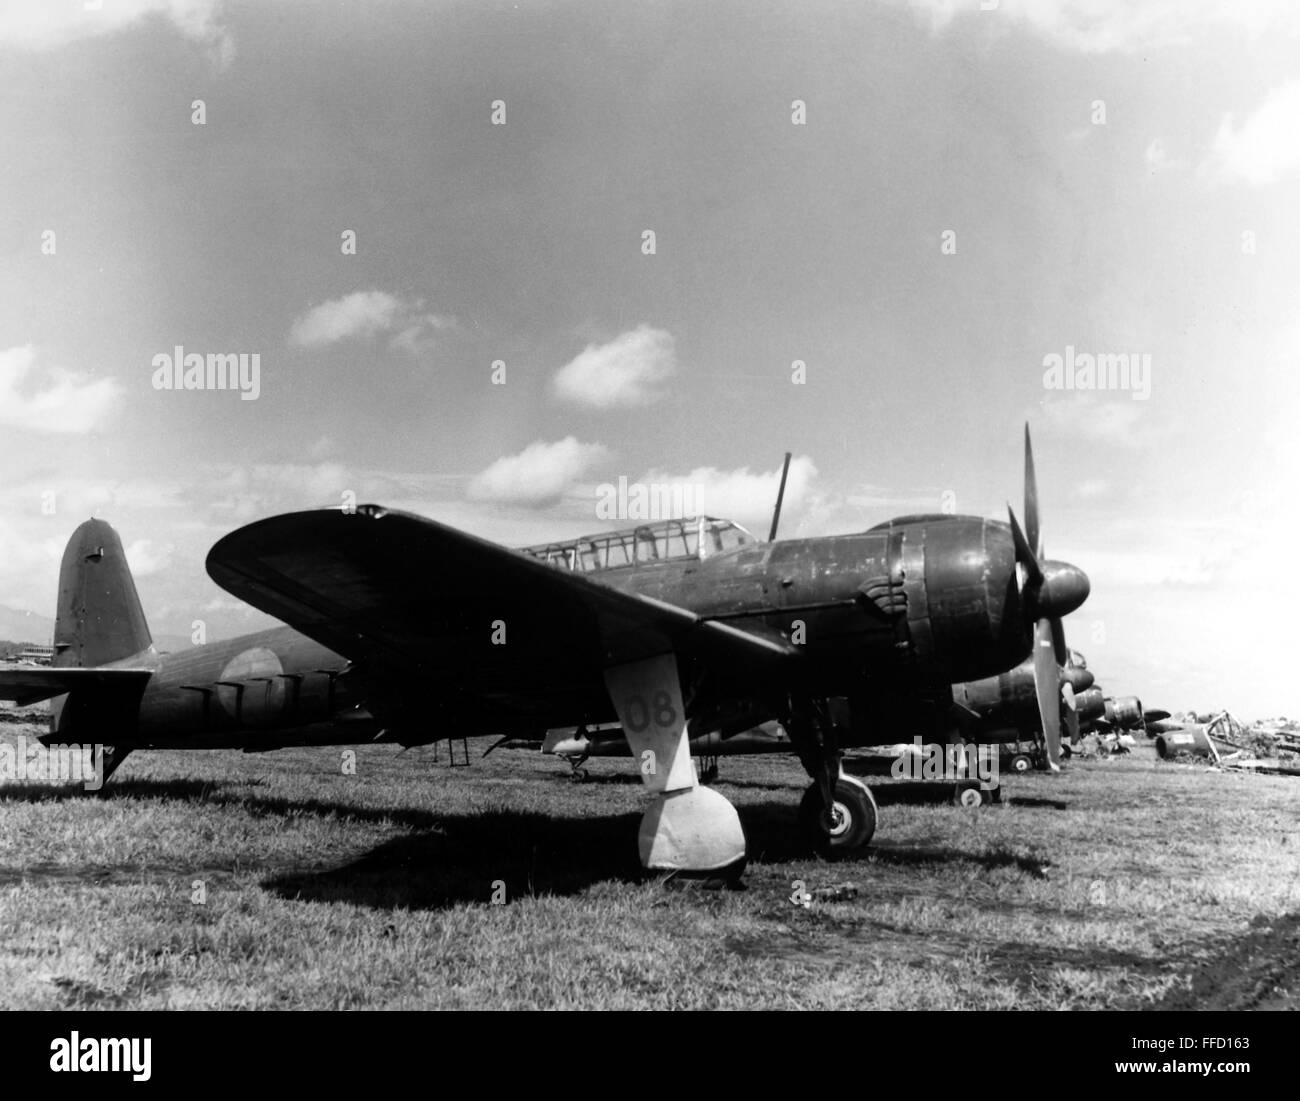 WORLD WAR II: BOMBER, 1945. /nJapanese Nakajima B6N Tenzan torpedo bomber (Allied codename 'Jill'). Photographed September 1945. Stock Photo